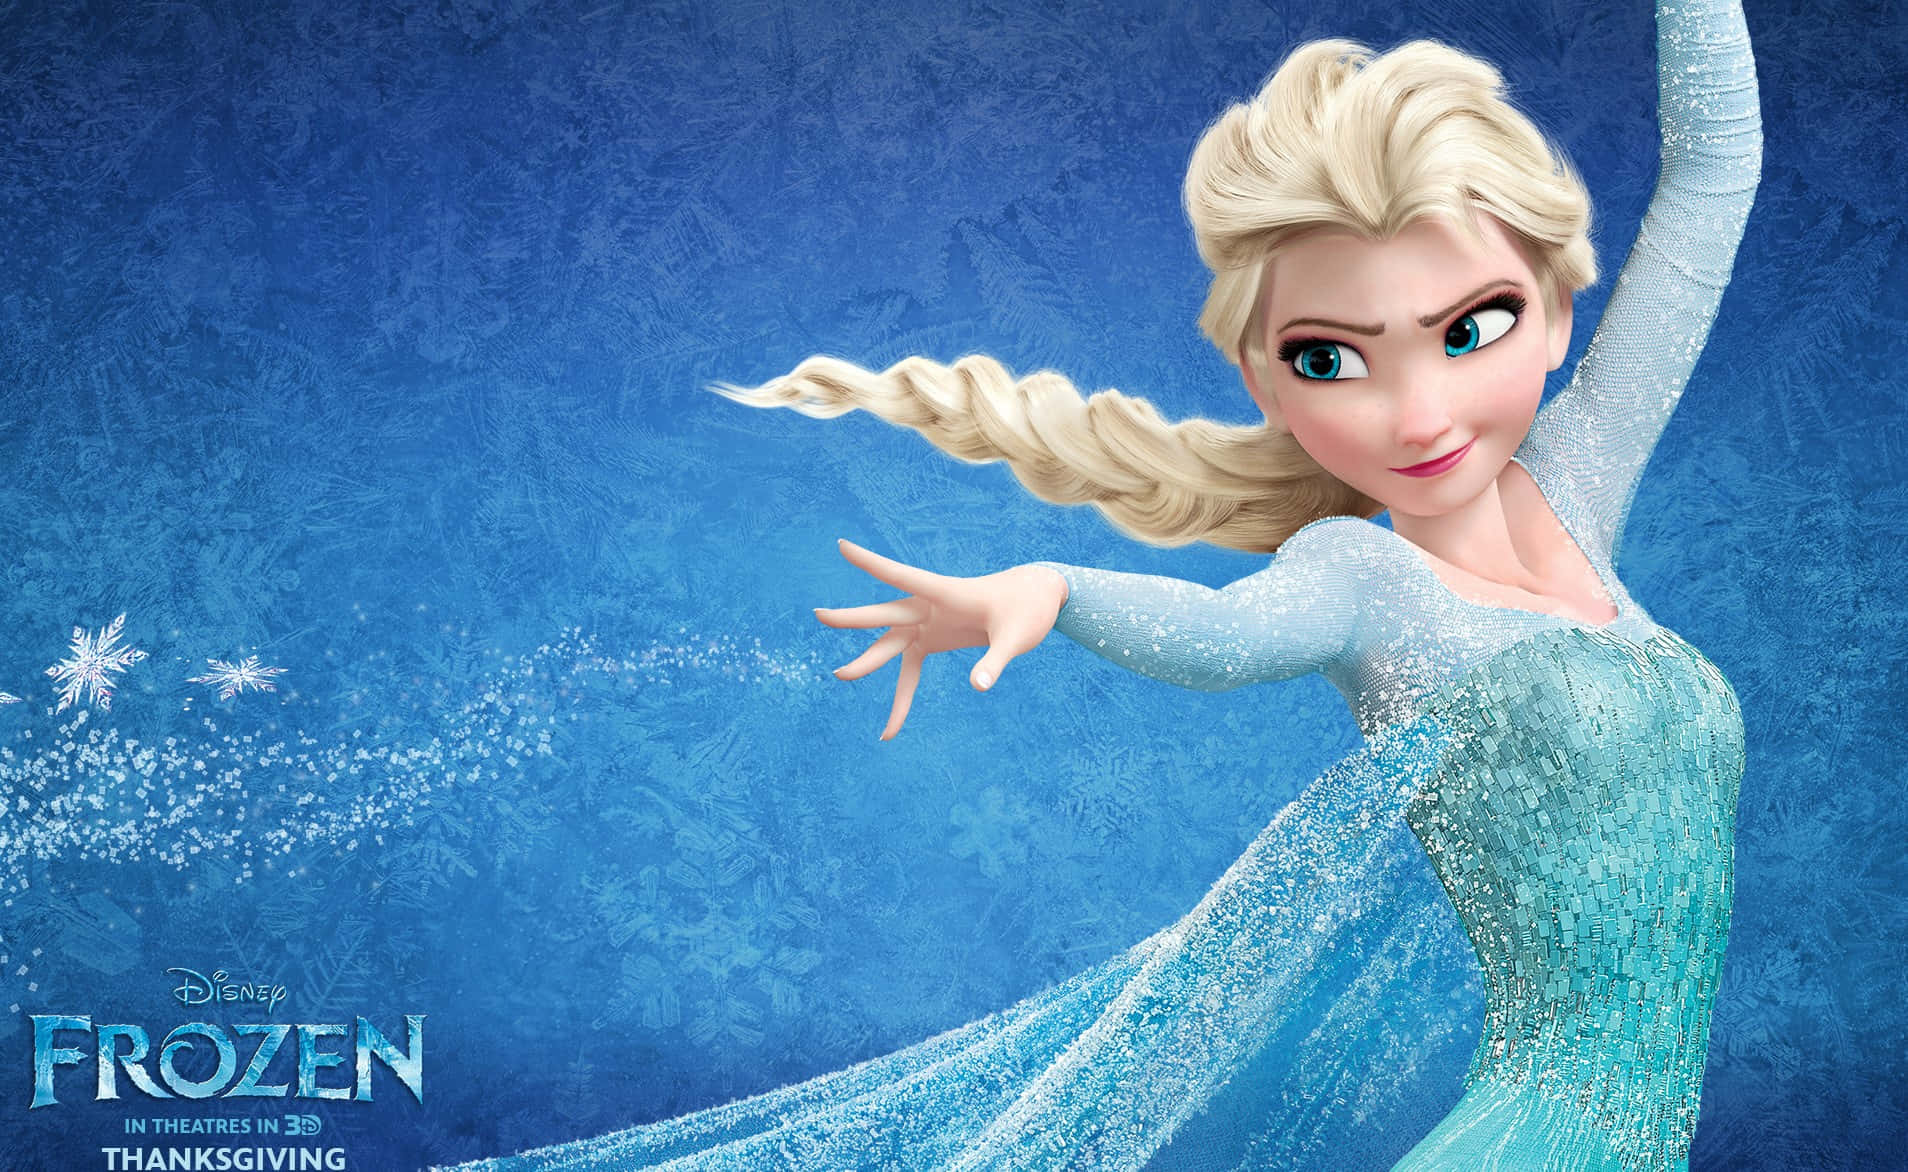 Enchanting Elsa in a magical winter landscape